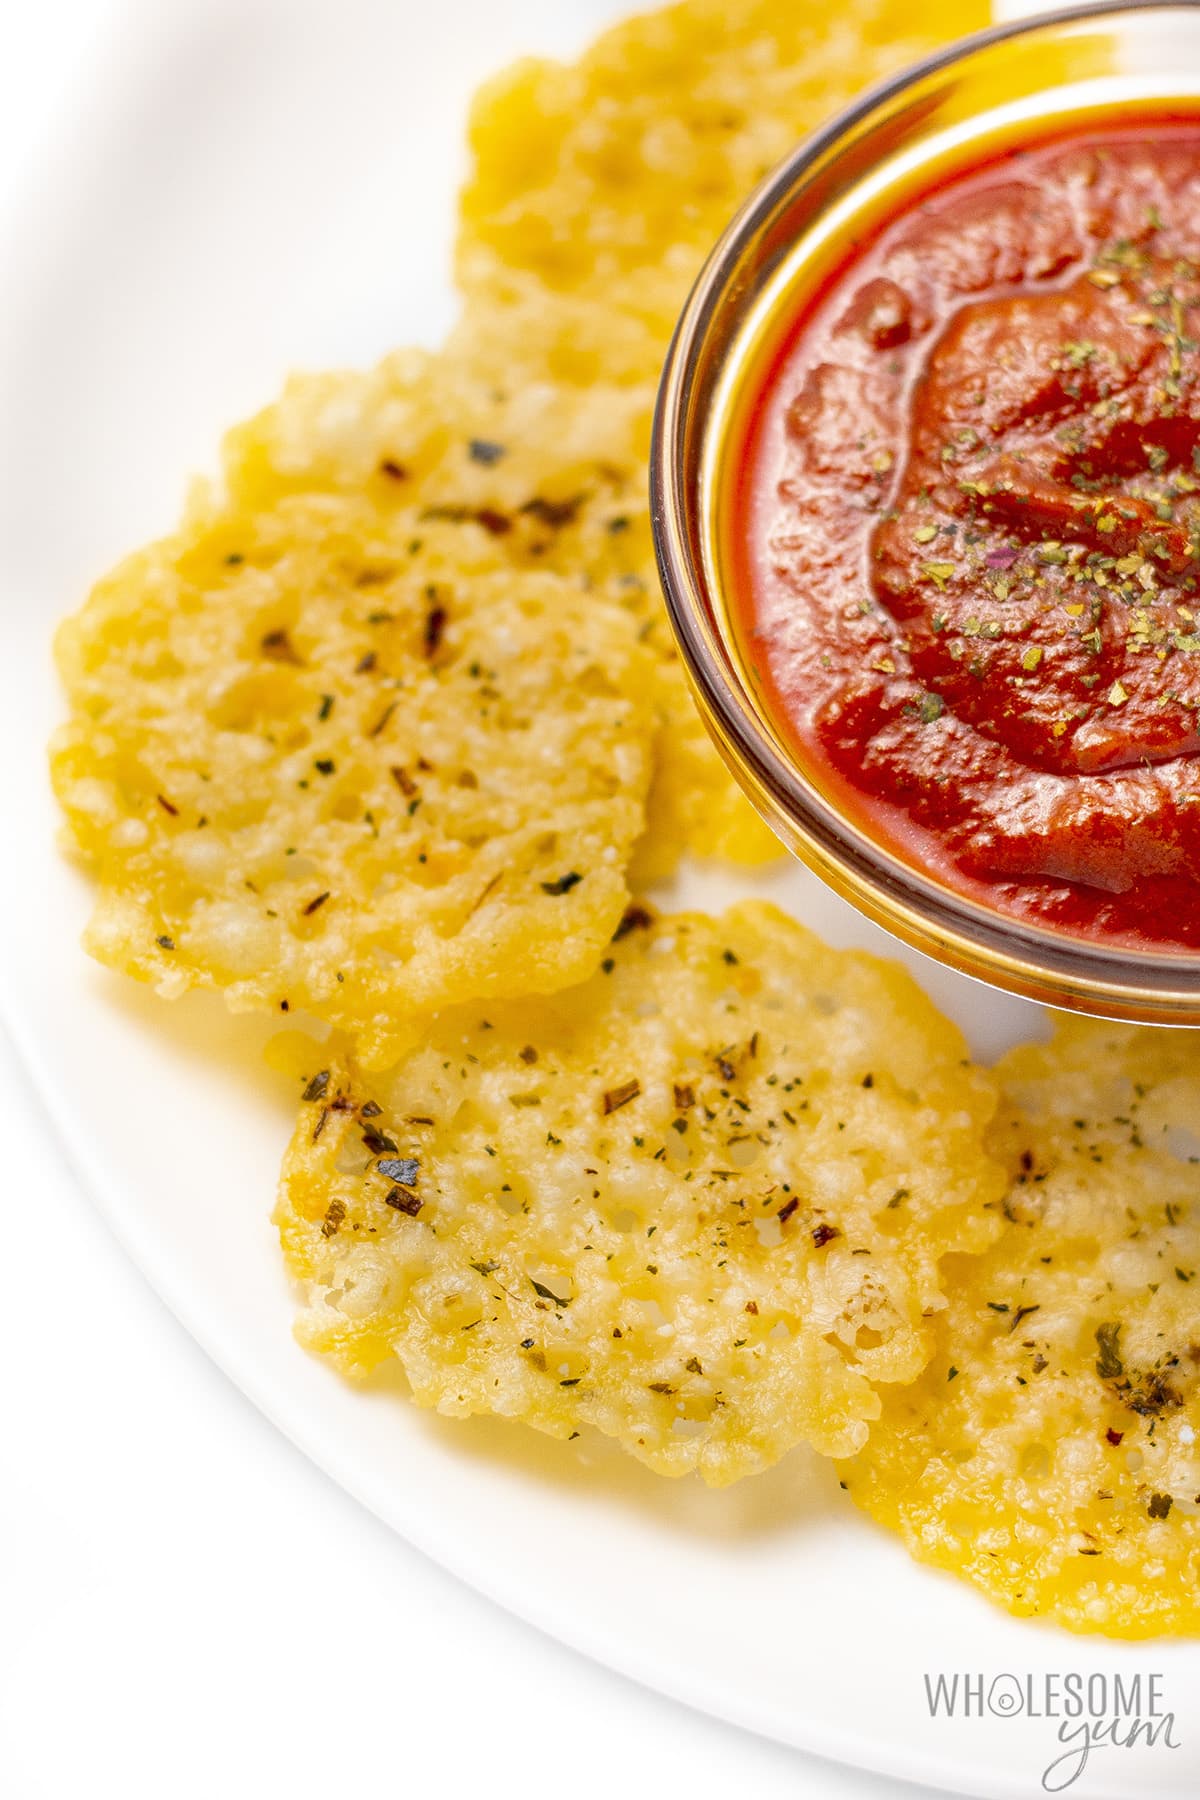 Parmesan crisps on a plate with marinara sauce.